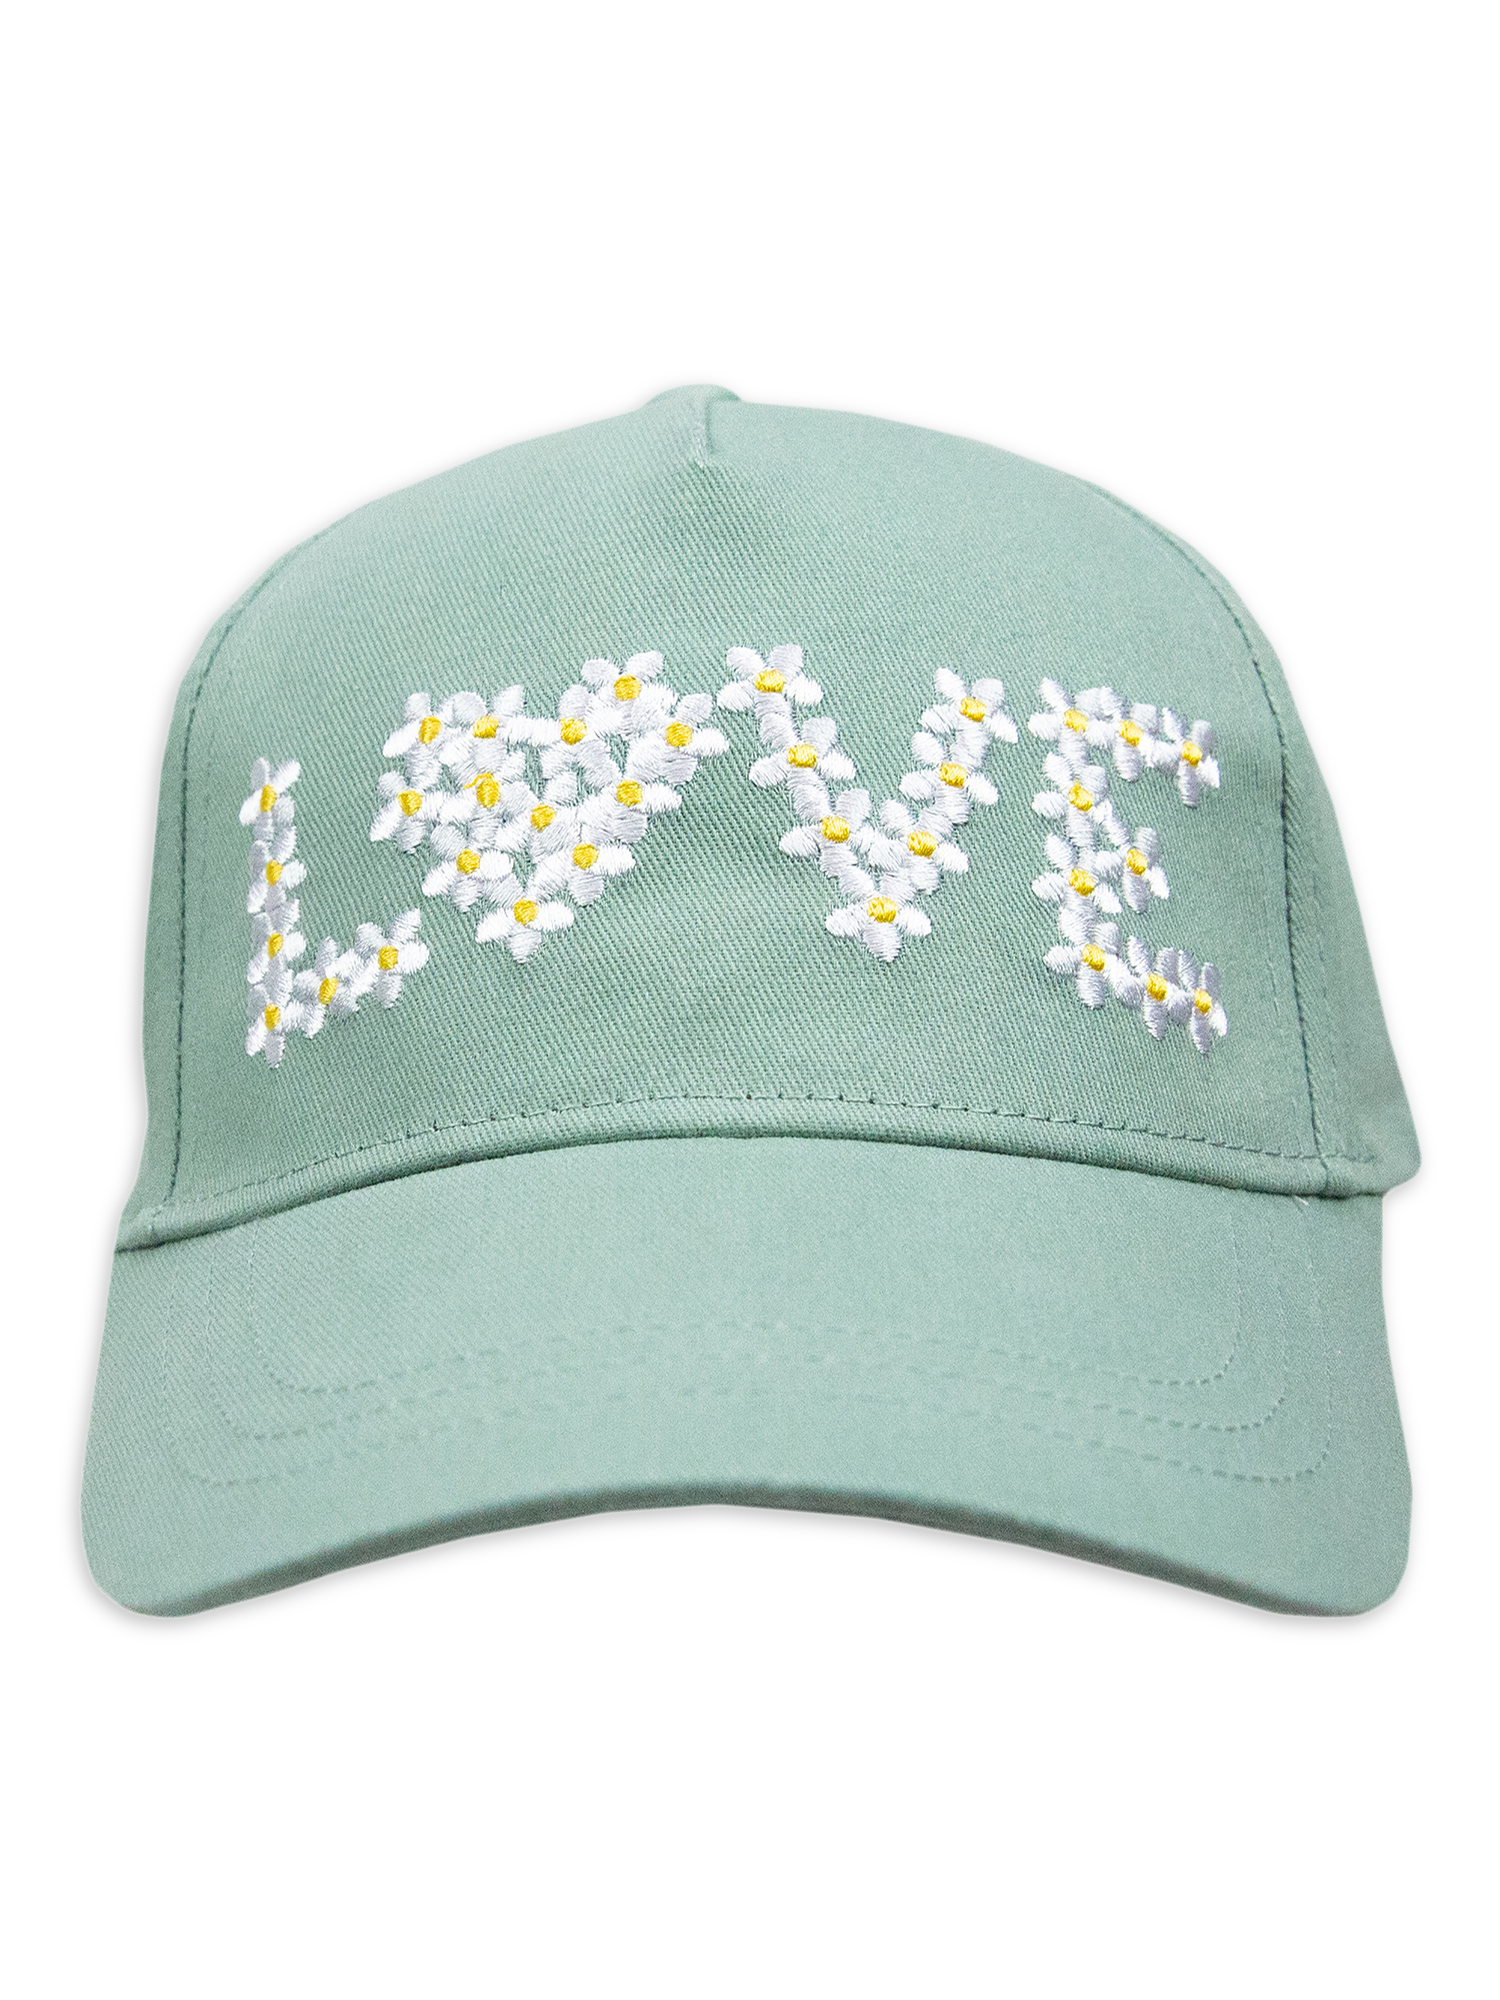 Wonder Nation Girls Embroidered Baseball Hat, Love - image 2 of 4